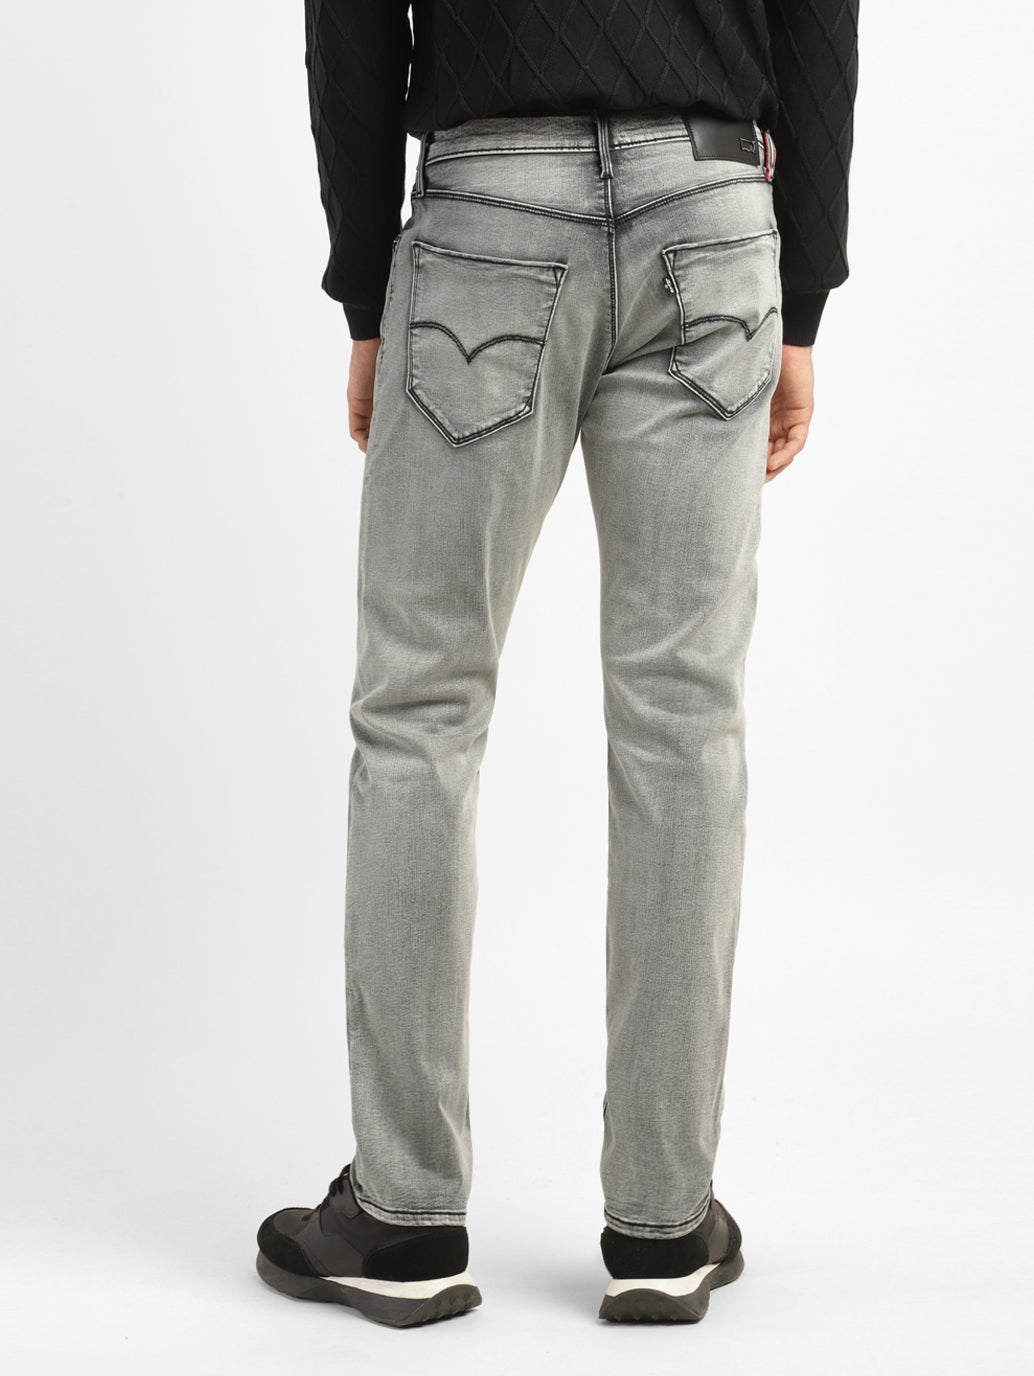 Men's 512 Light Grey Slim Tapered Fit Jeans